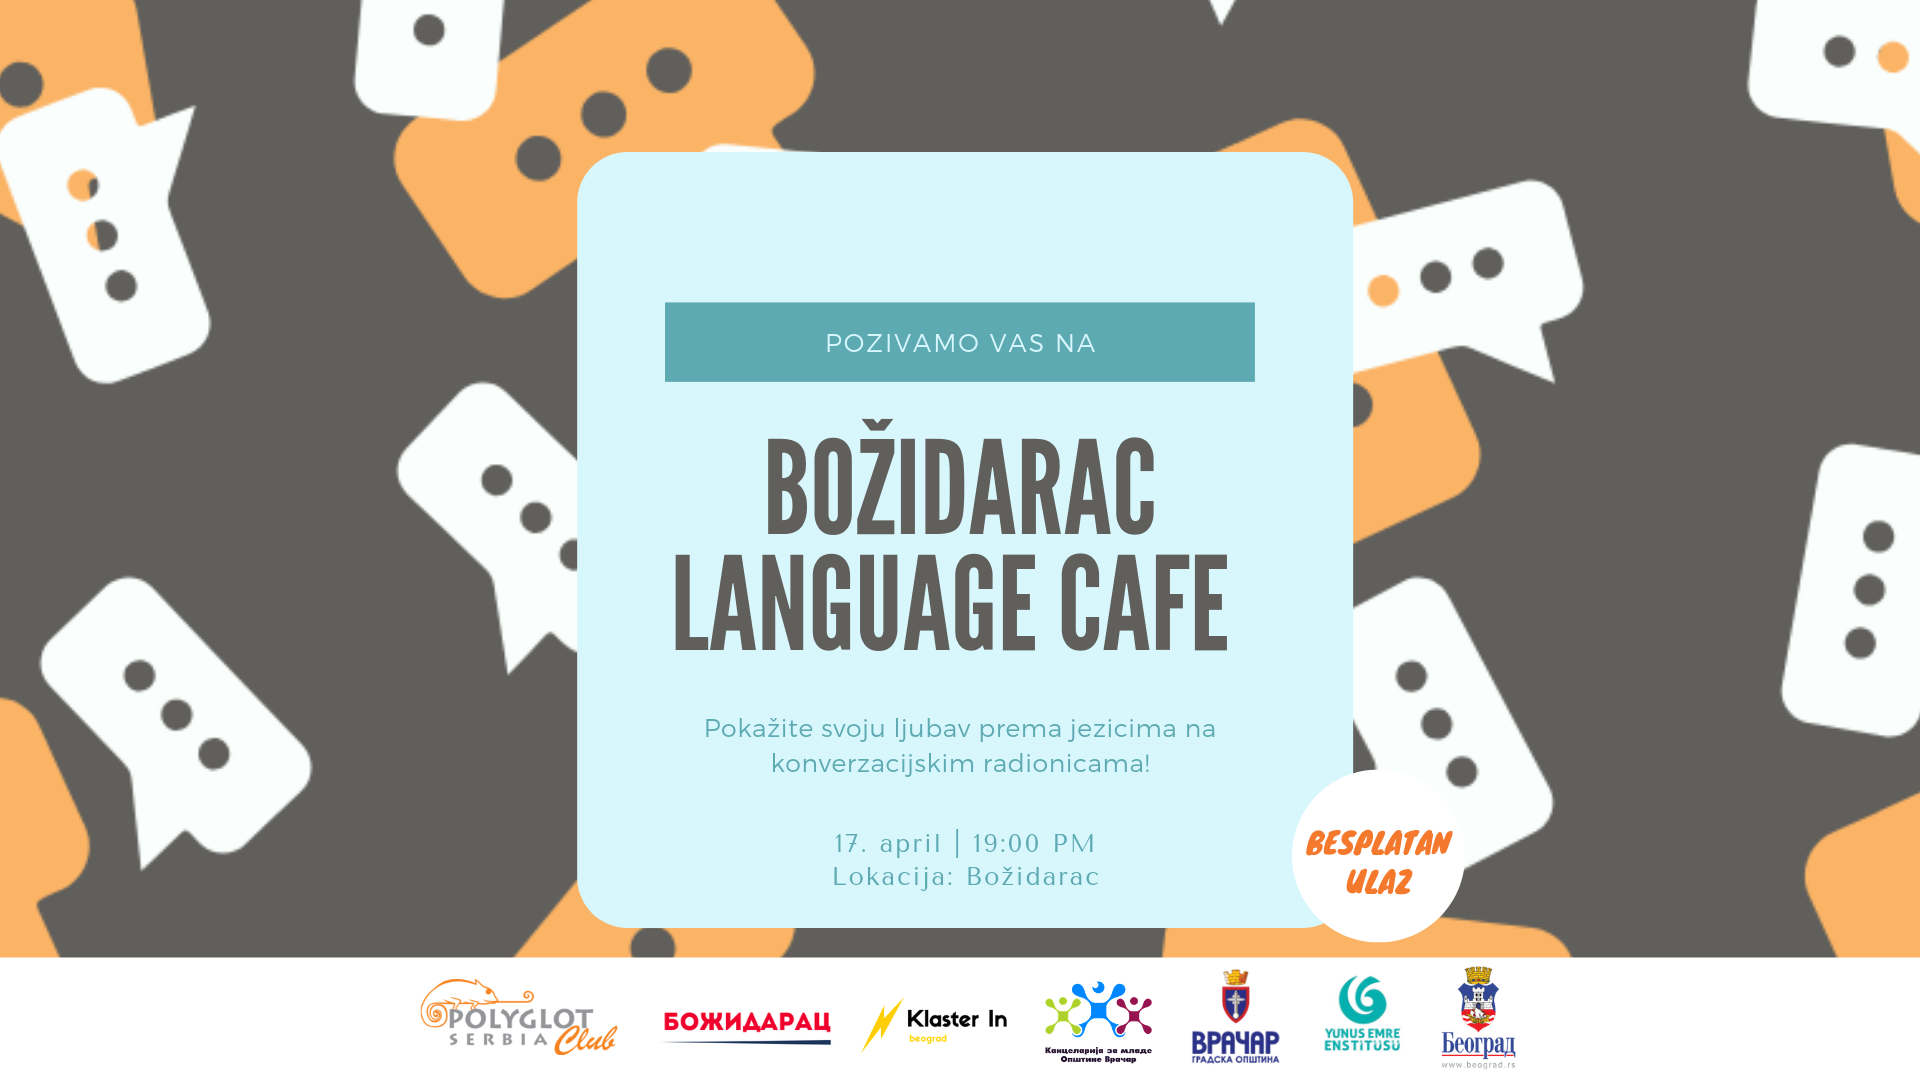 Божидарац Language cafe